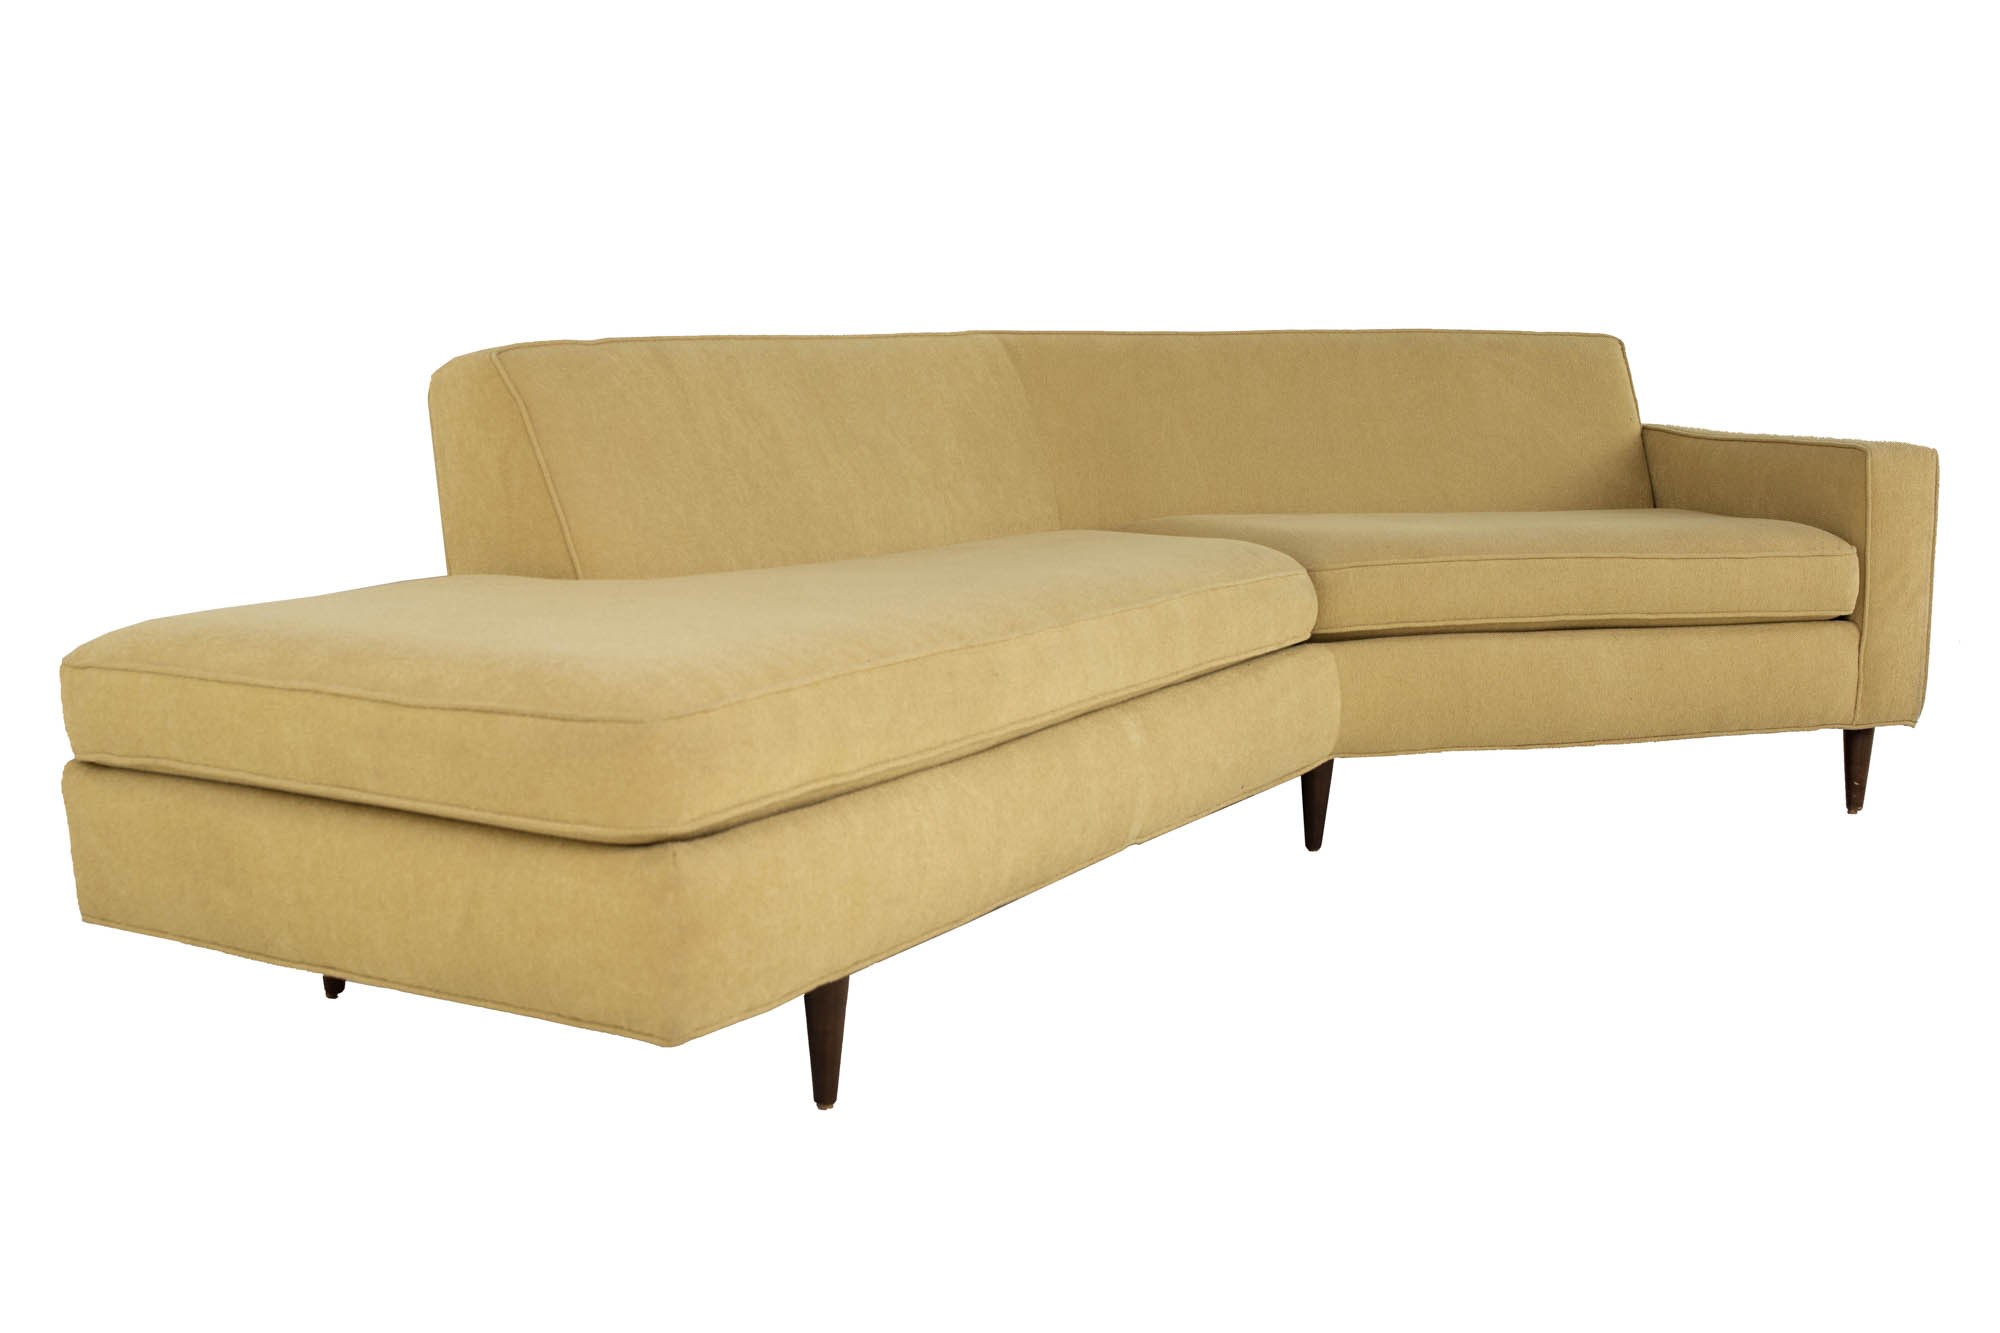 Thayer Coggin Mid Century Angle Bumper Sectional Sofa